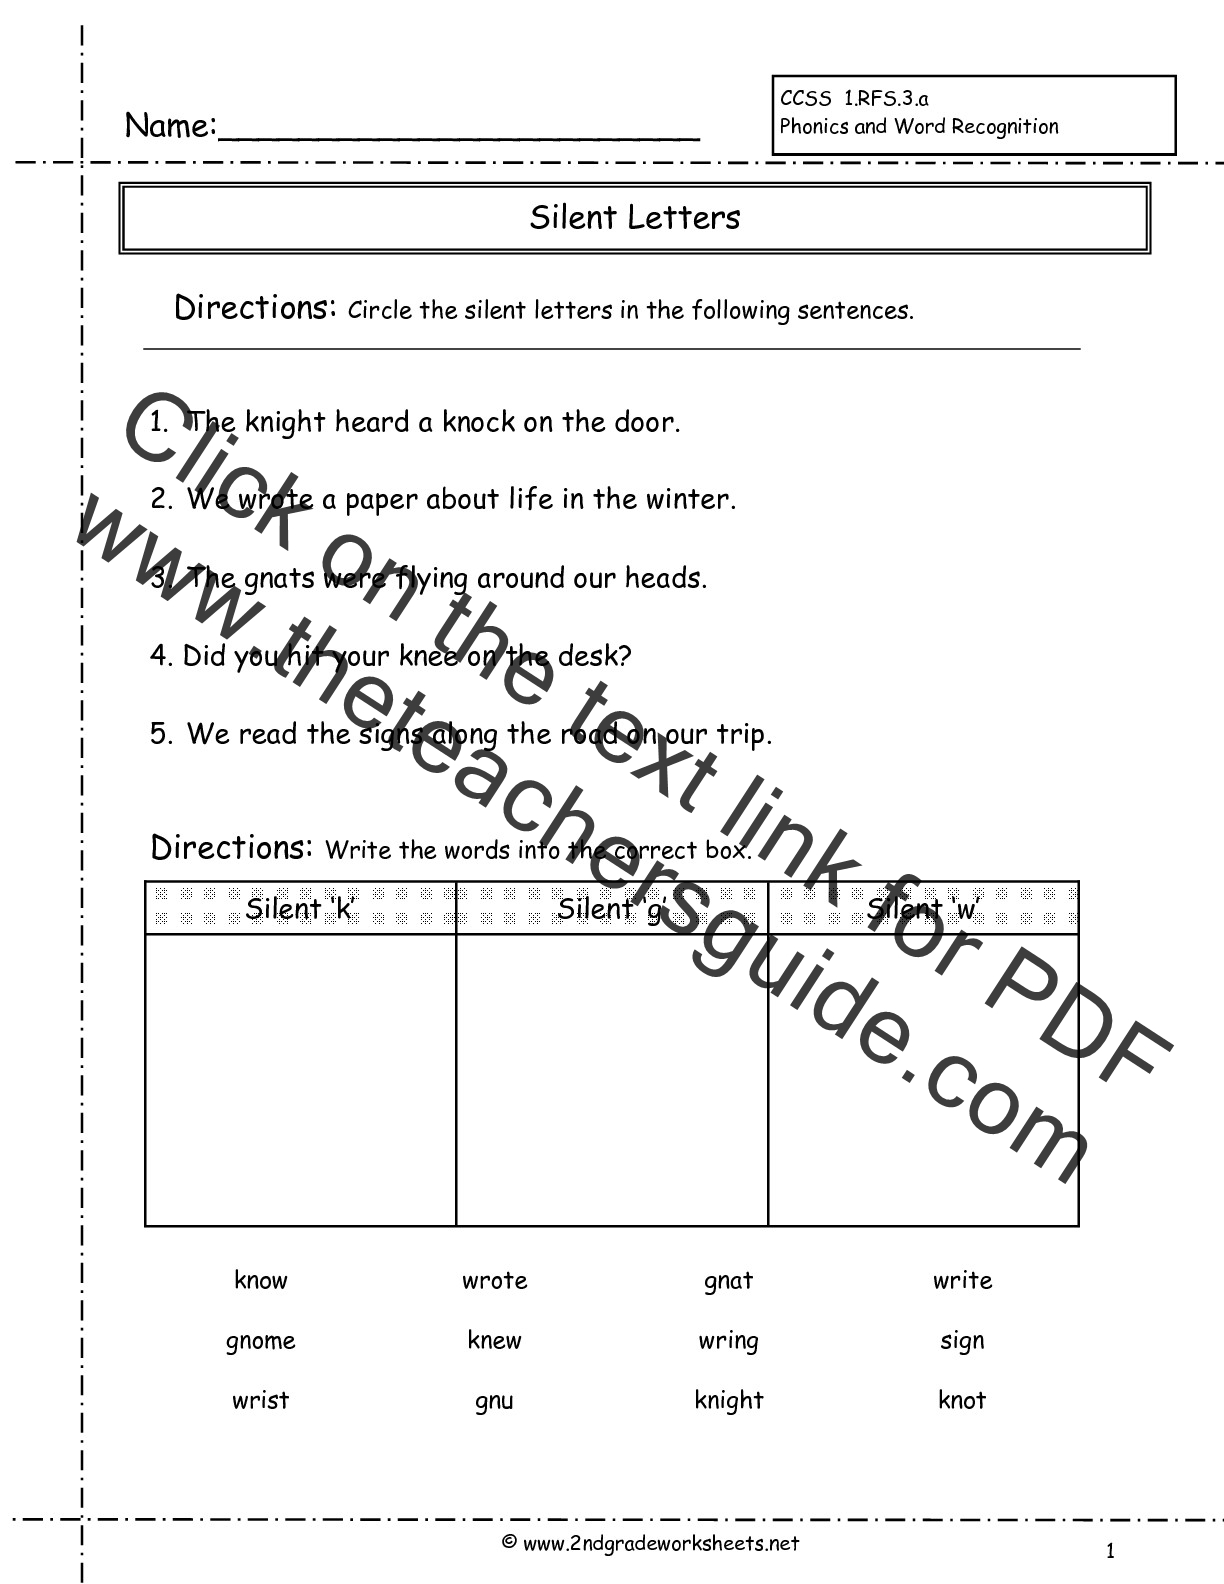 silent-letters-worksheets-free-word-work-letter-worksheets-phonics